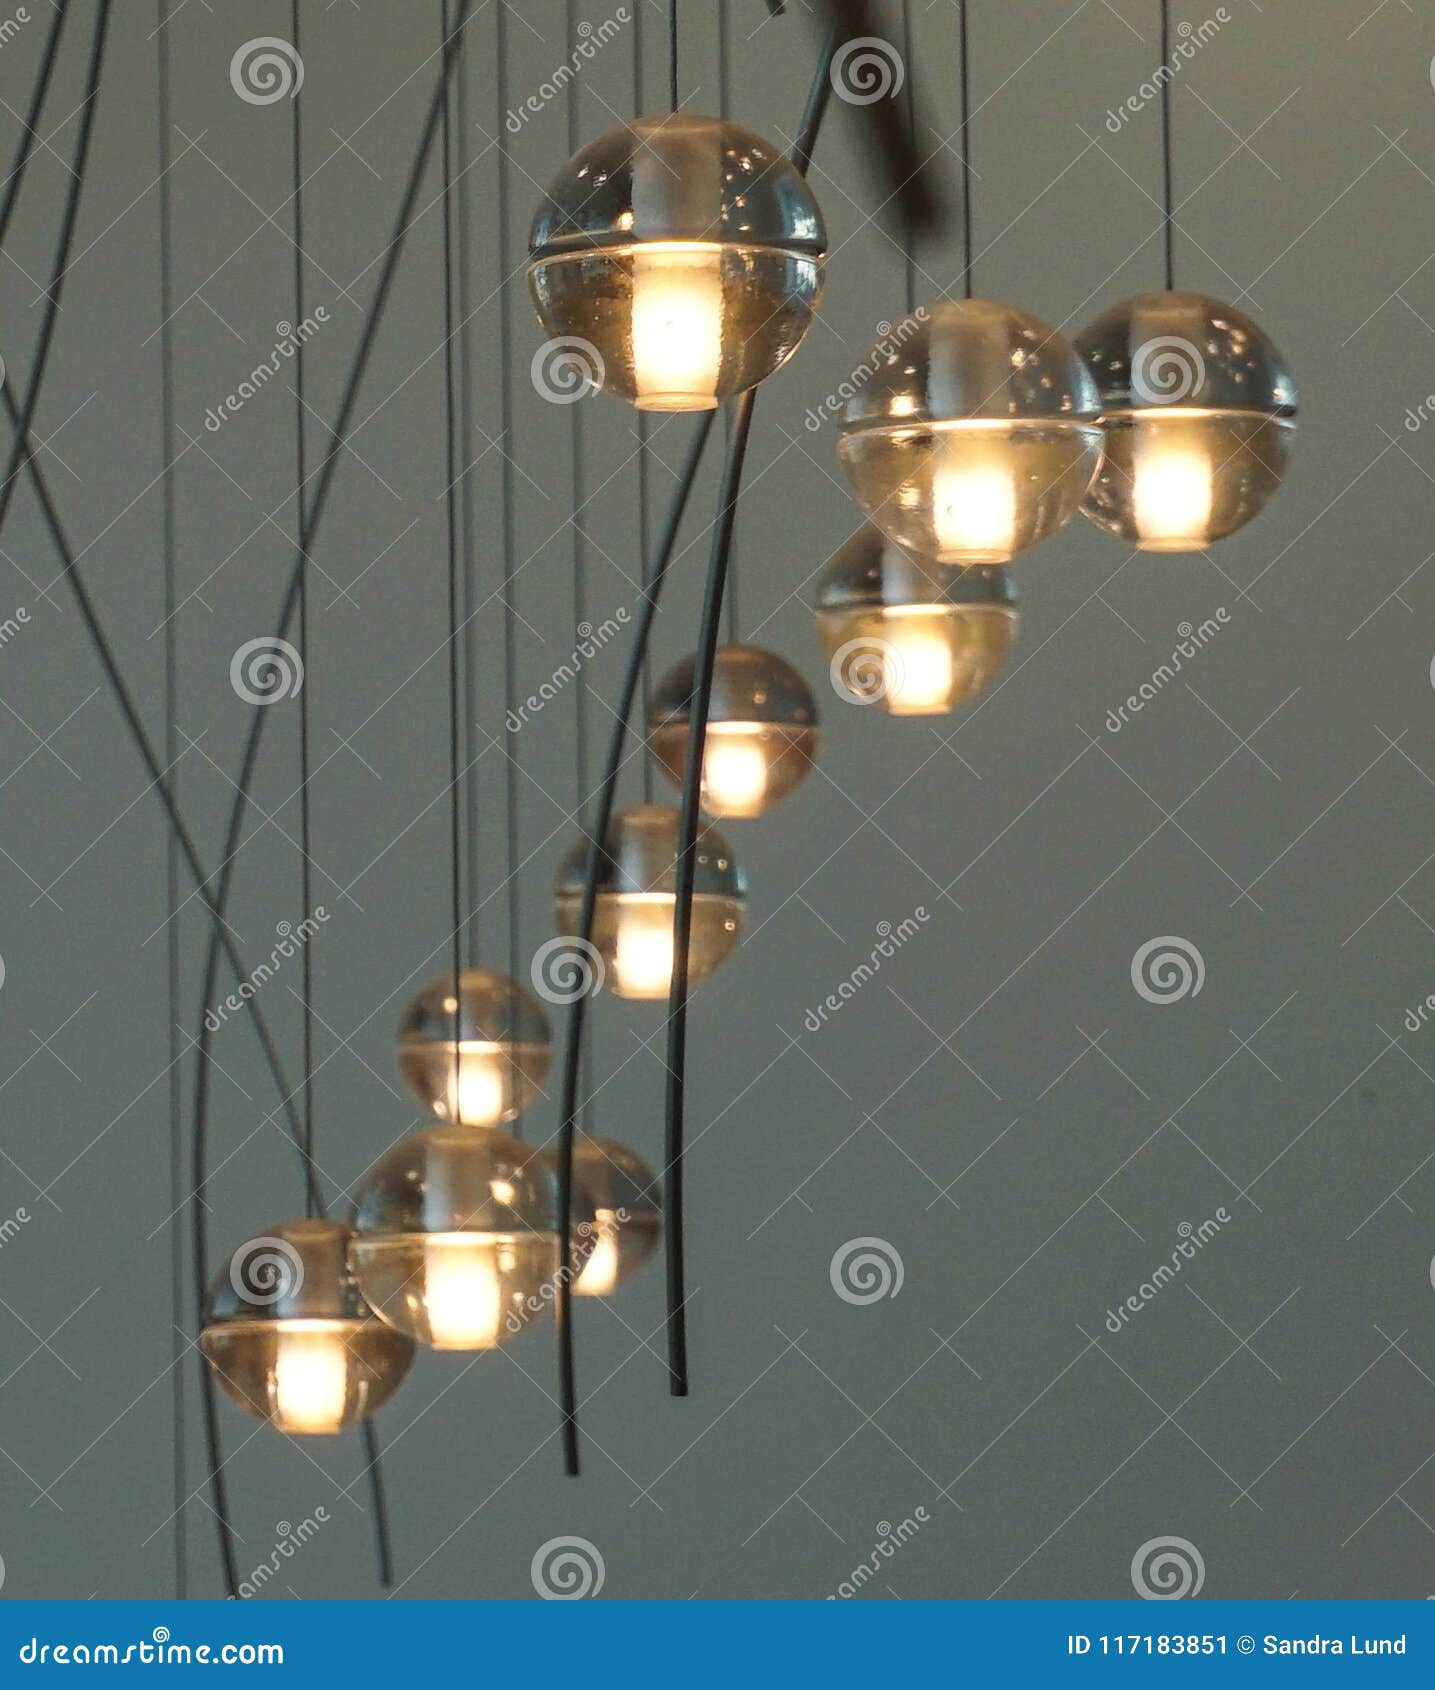 Hanging Modern Light Arrangement Stock Image Image Of Lighting